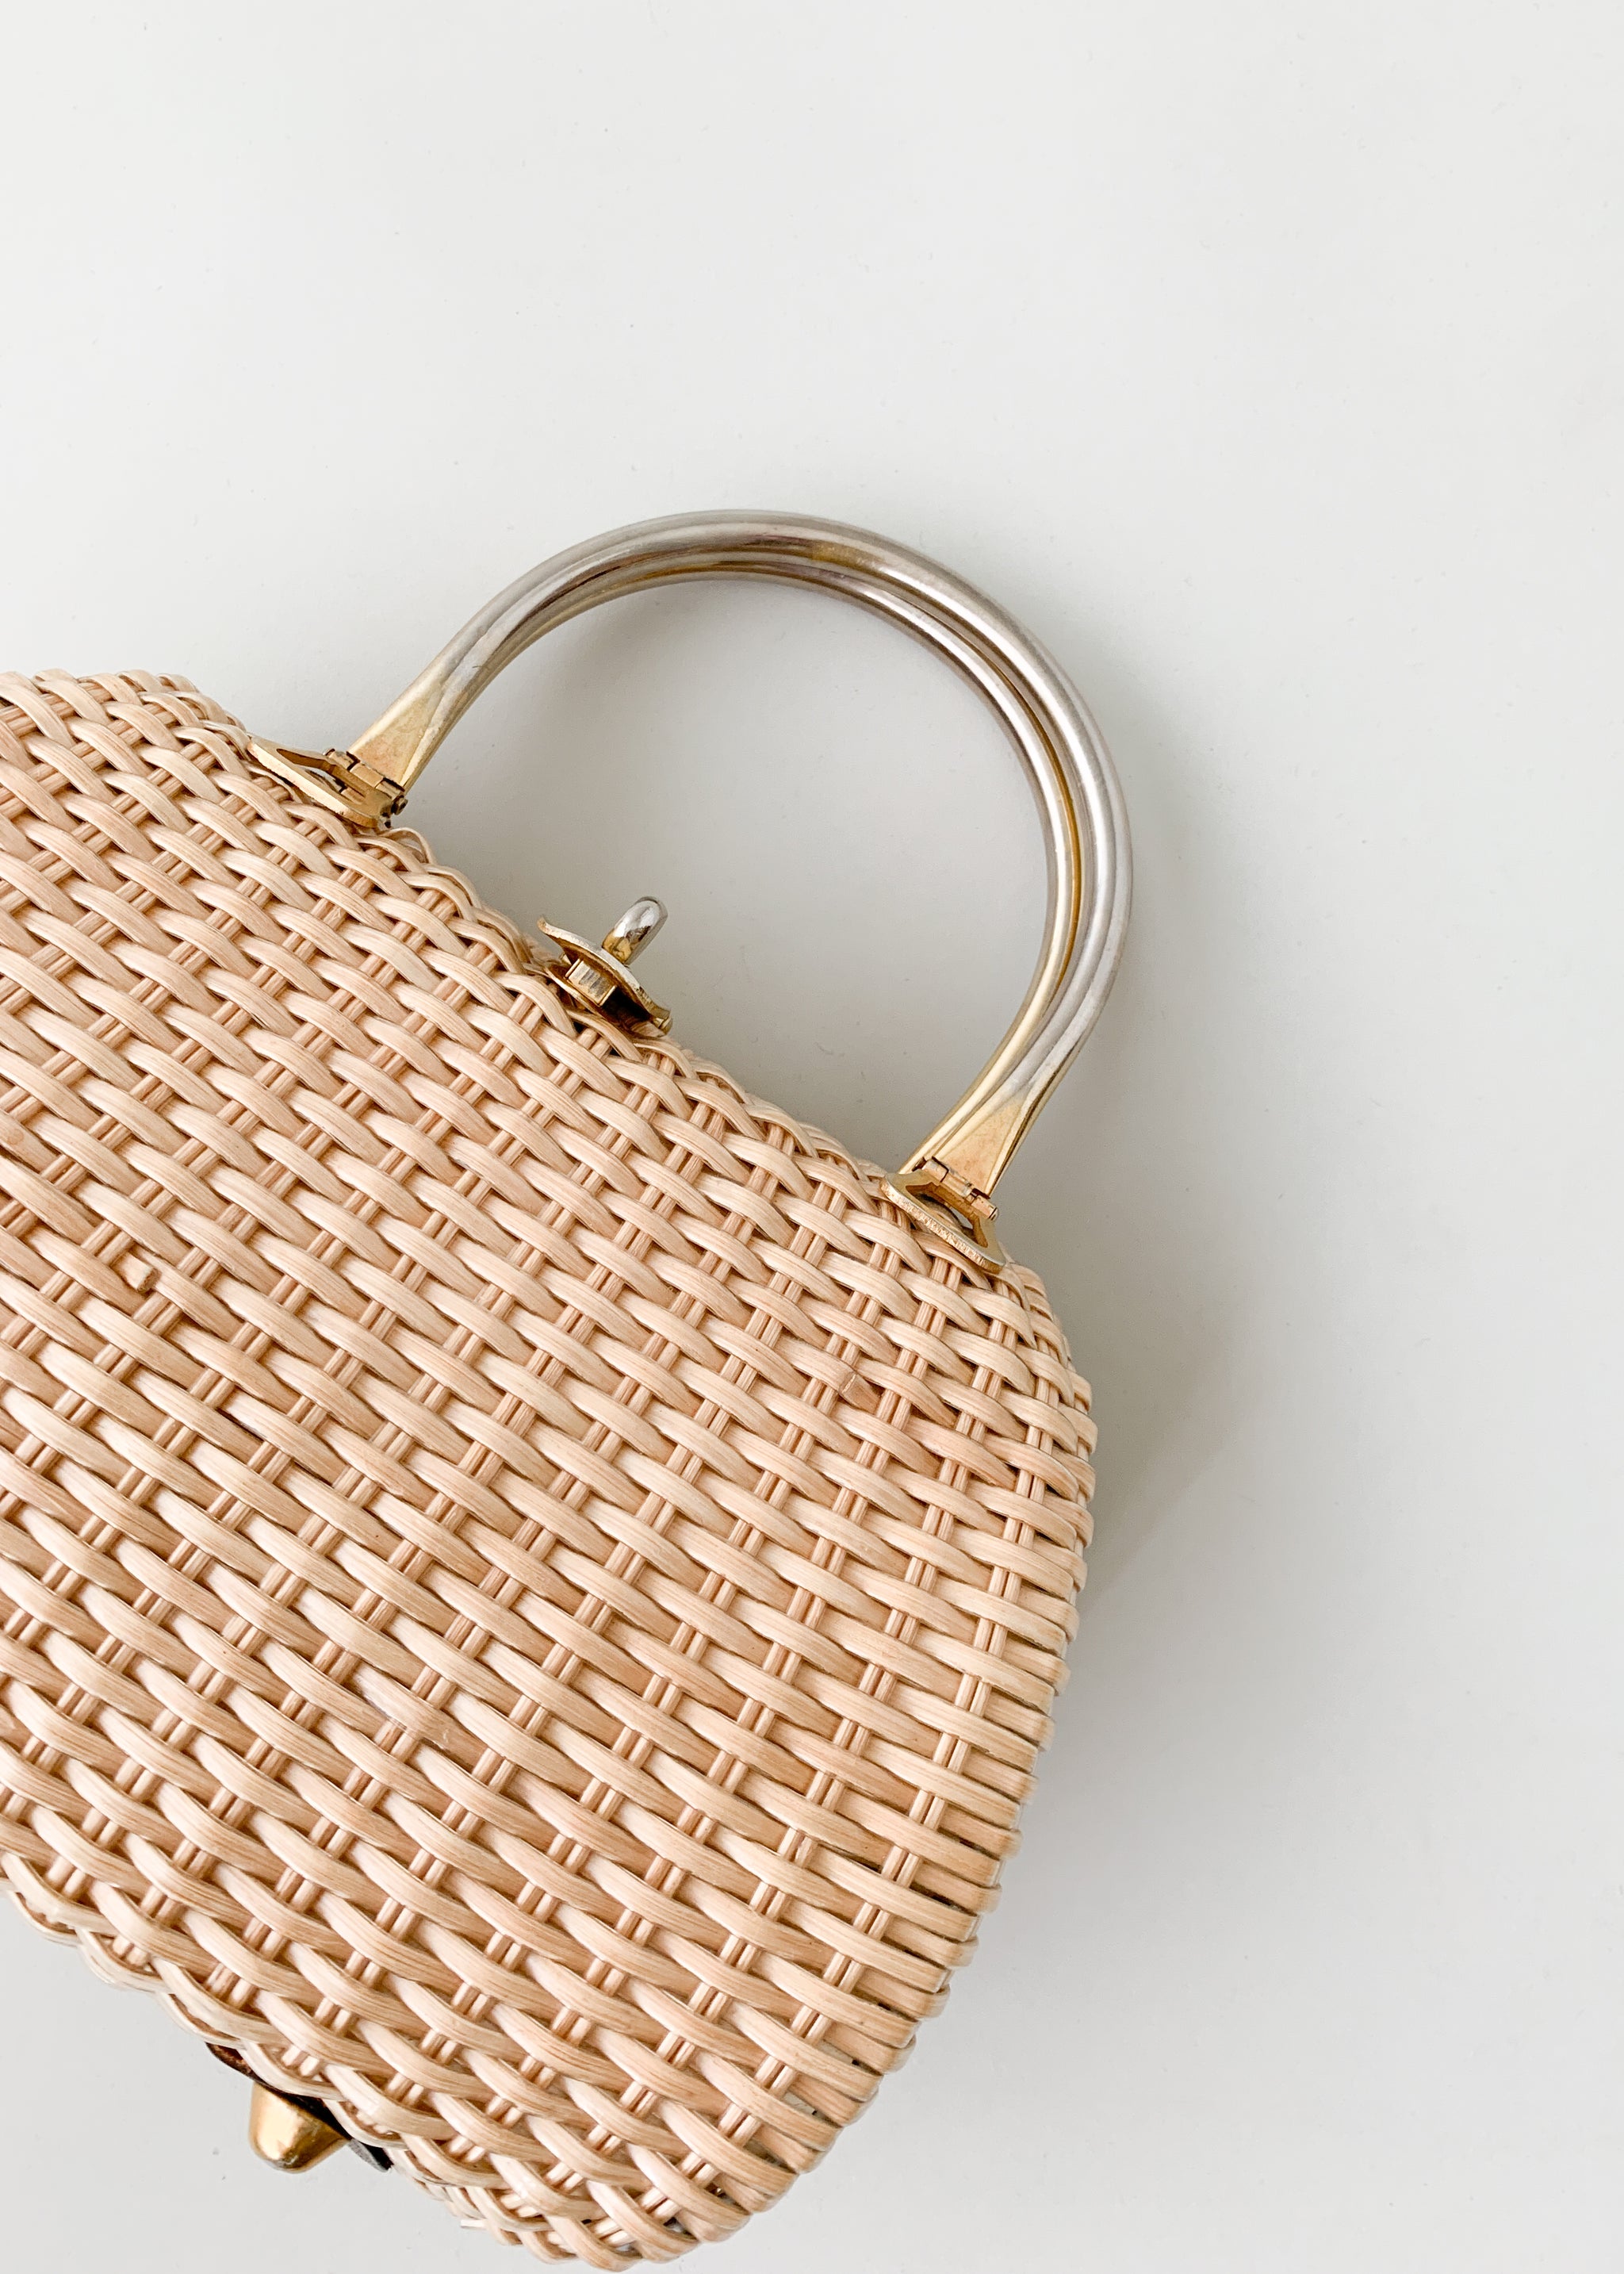 Koret Gold Vintage Handbags | Mercari